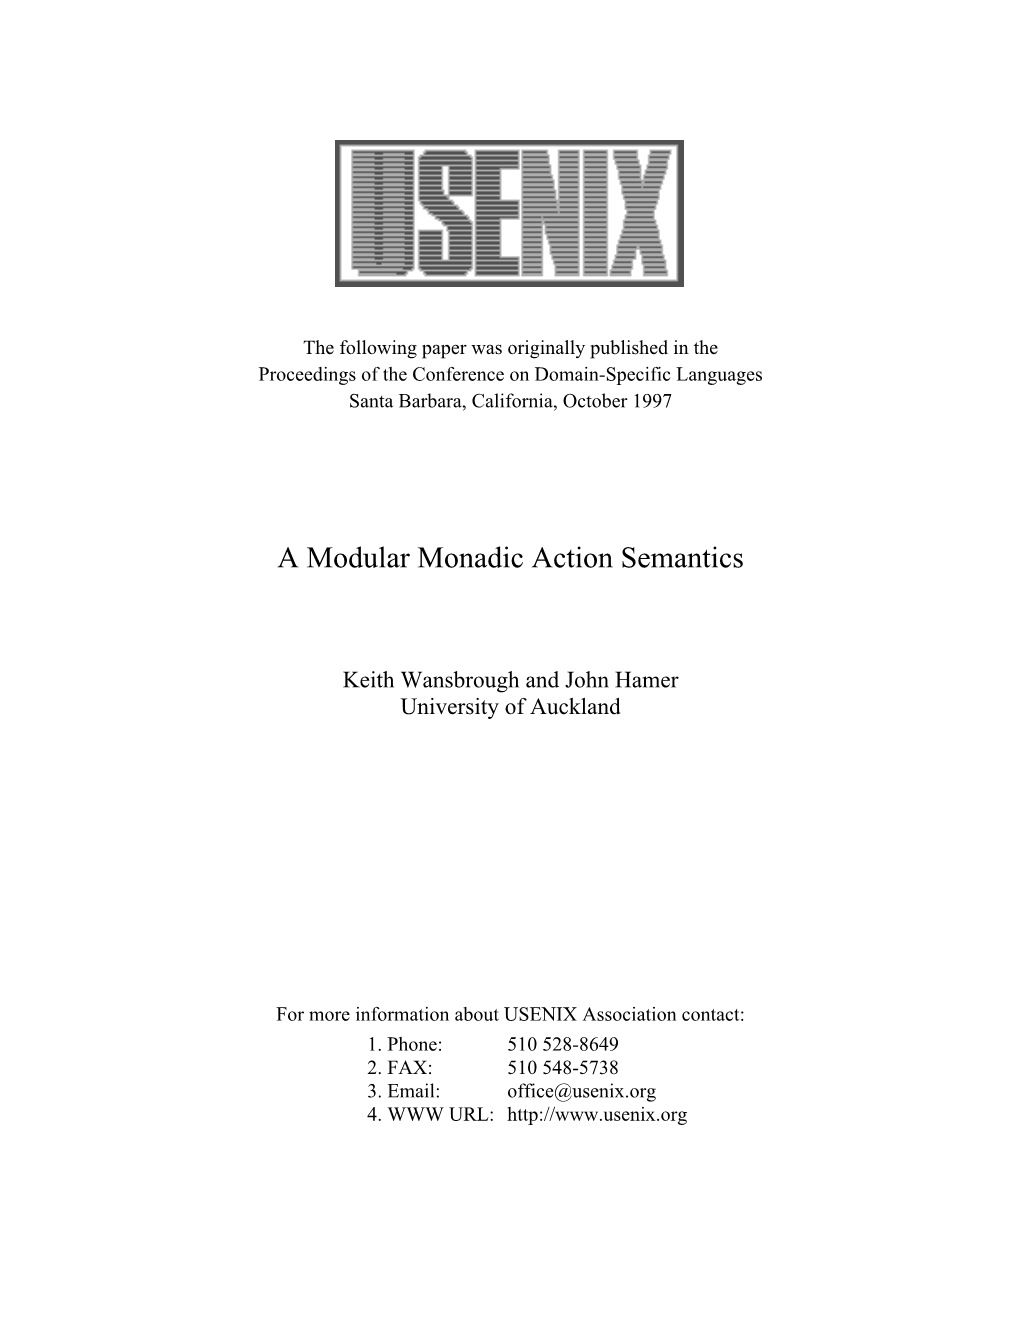 A Modular Monadic Action Semantics